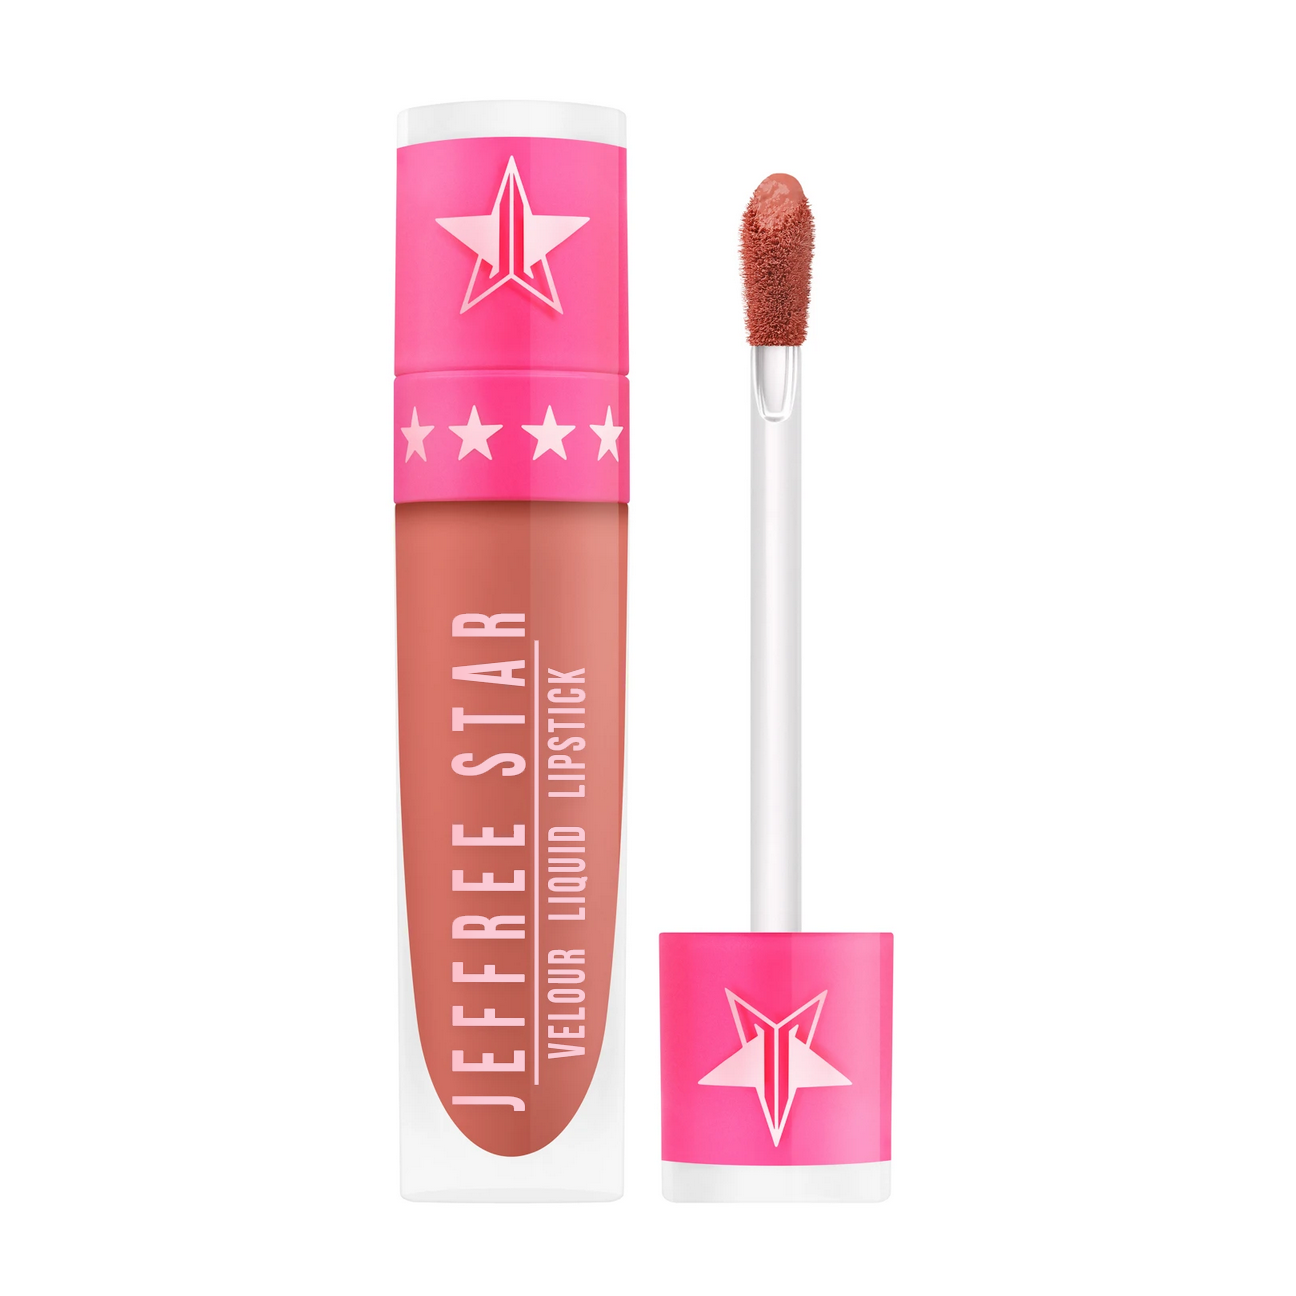 Jeffree Star Cosmetics Velour Liquid Lipstick - Alledgedly